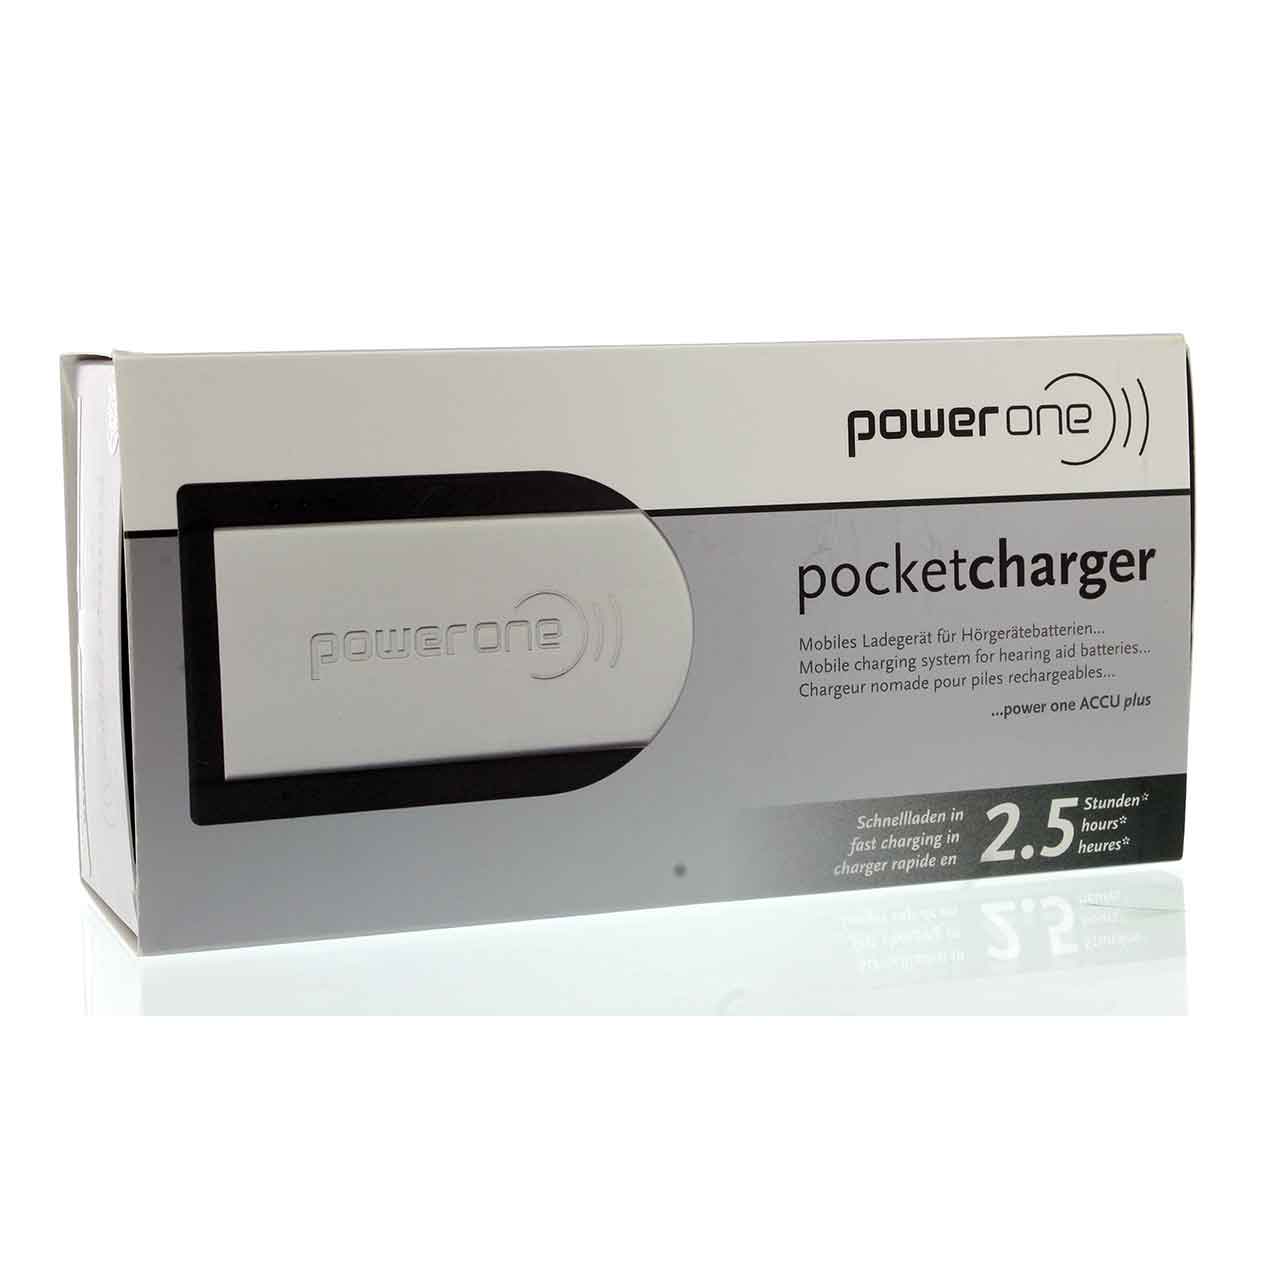 Power One Pocketcharger - mobiles Schnellladegerät für Hörgerätebatterien